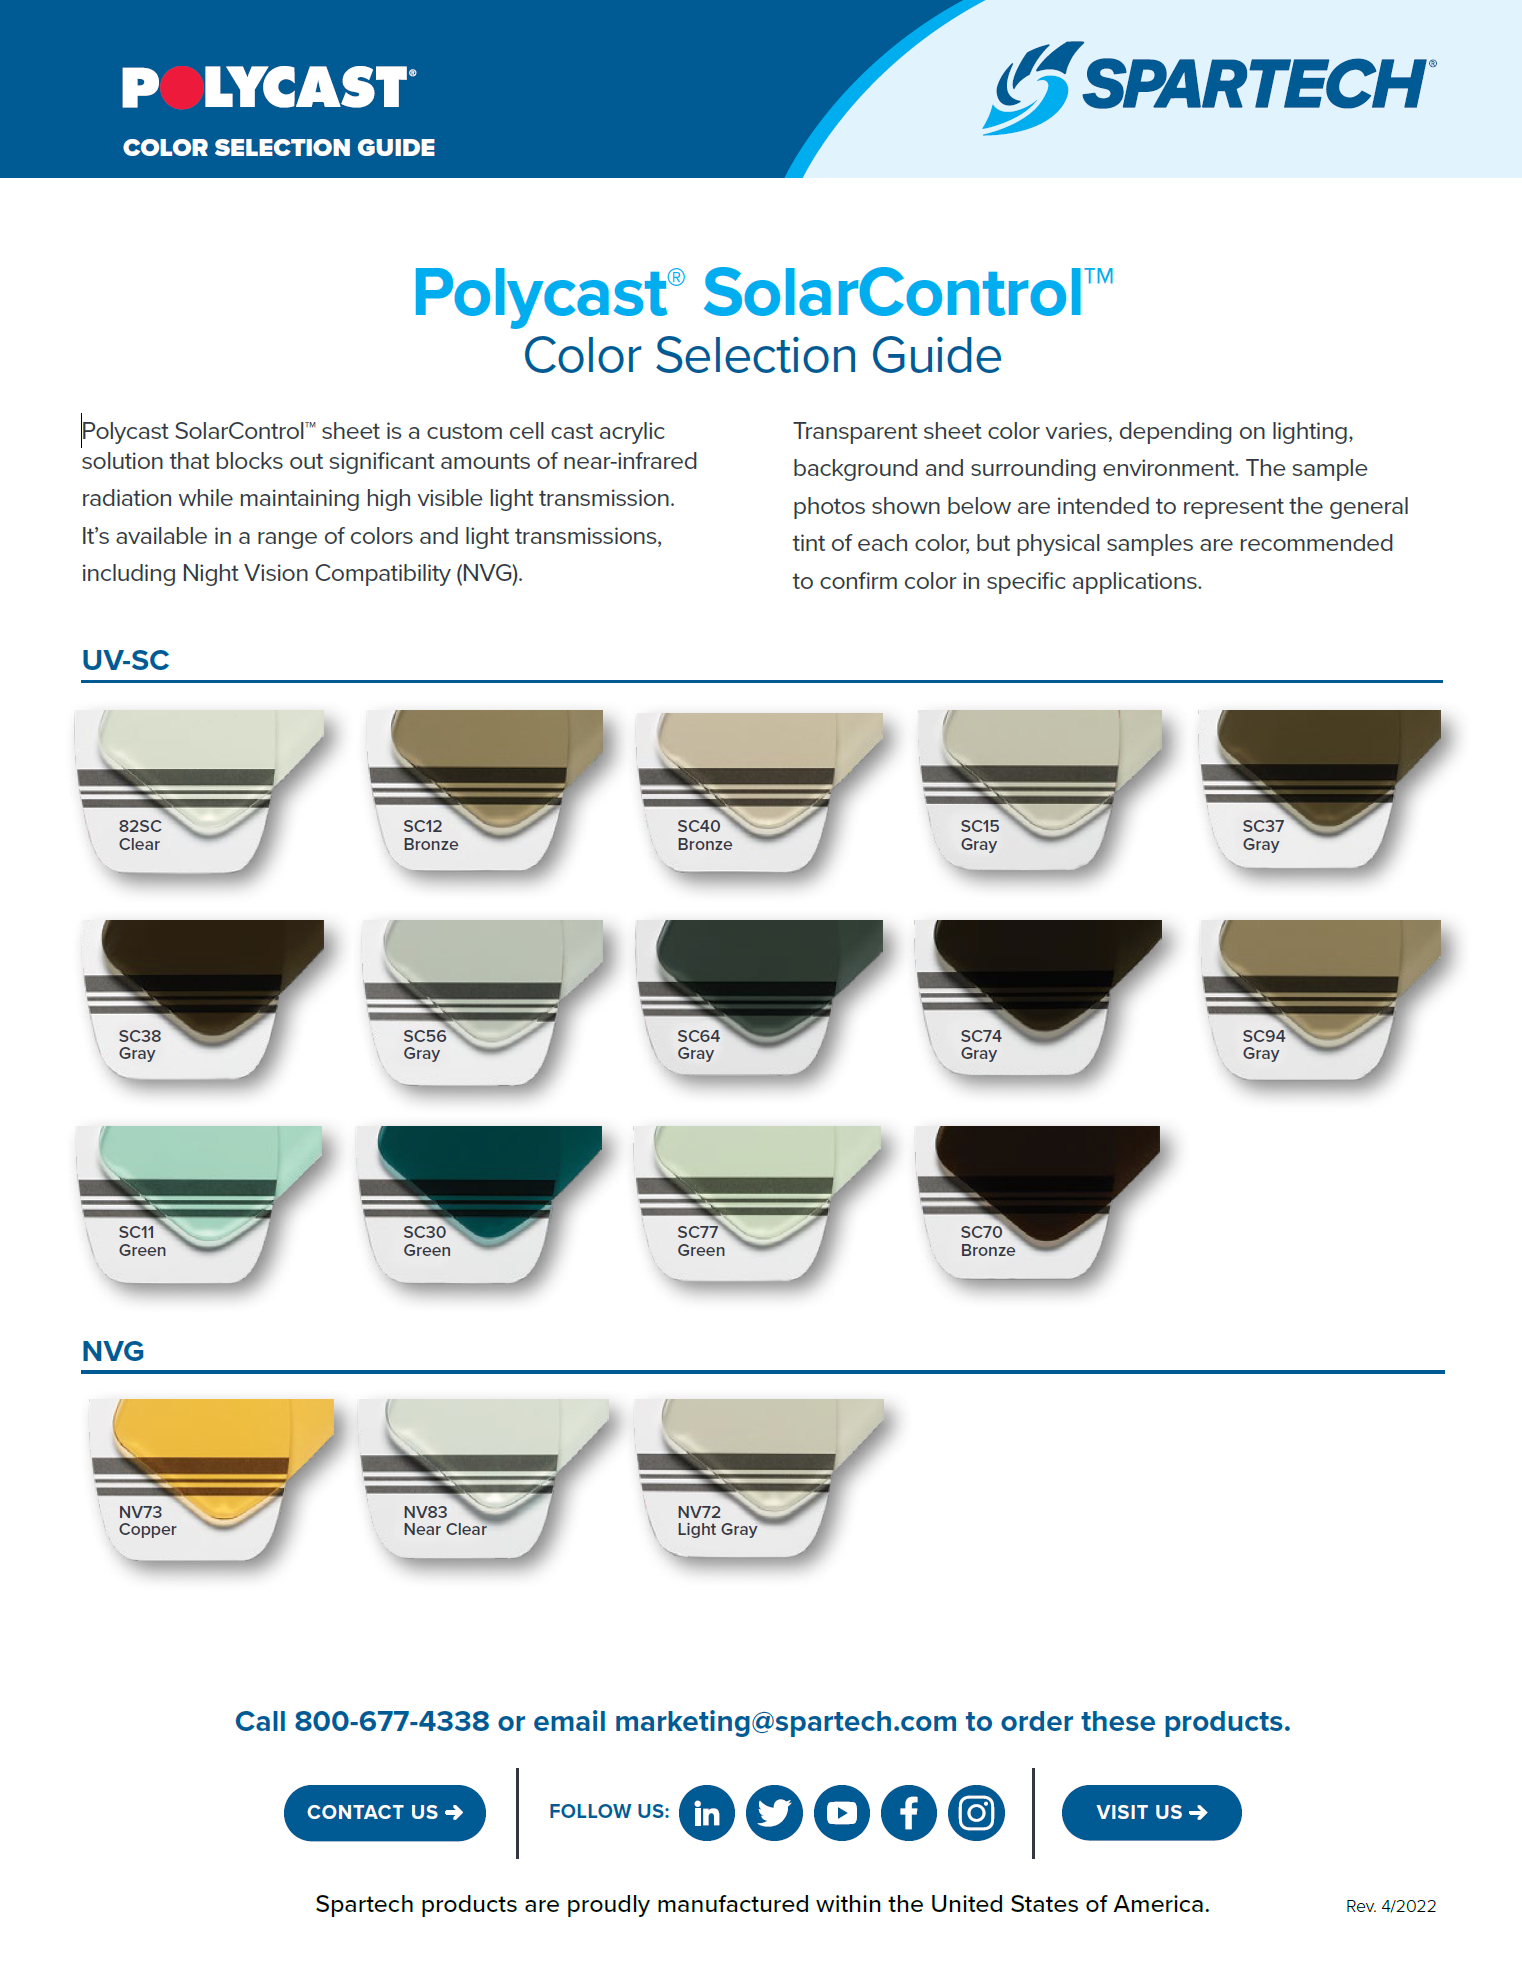 SPA221040 Polycast Solar Control Color Selection Guide